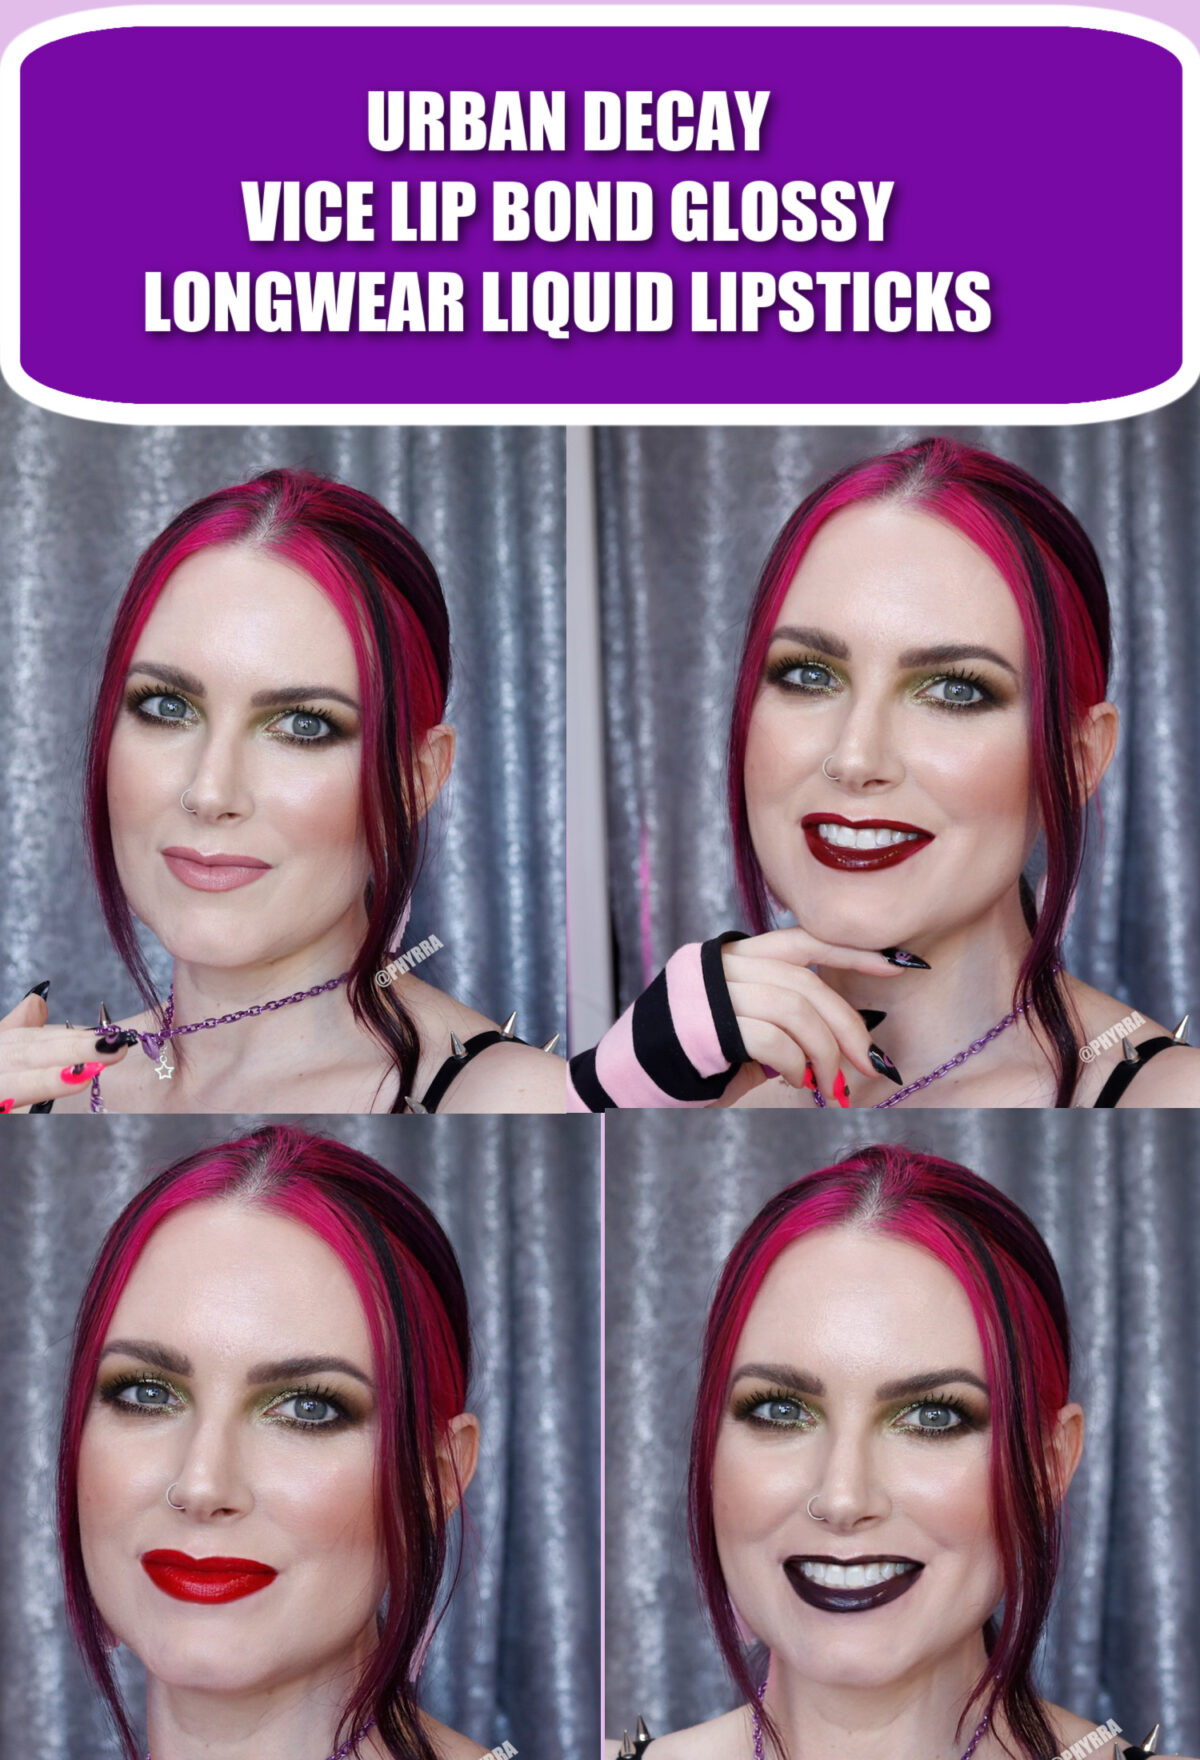 Urban Decay Vice Lip Bond Glossy Longwear Liquid Lipsticks Review